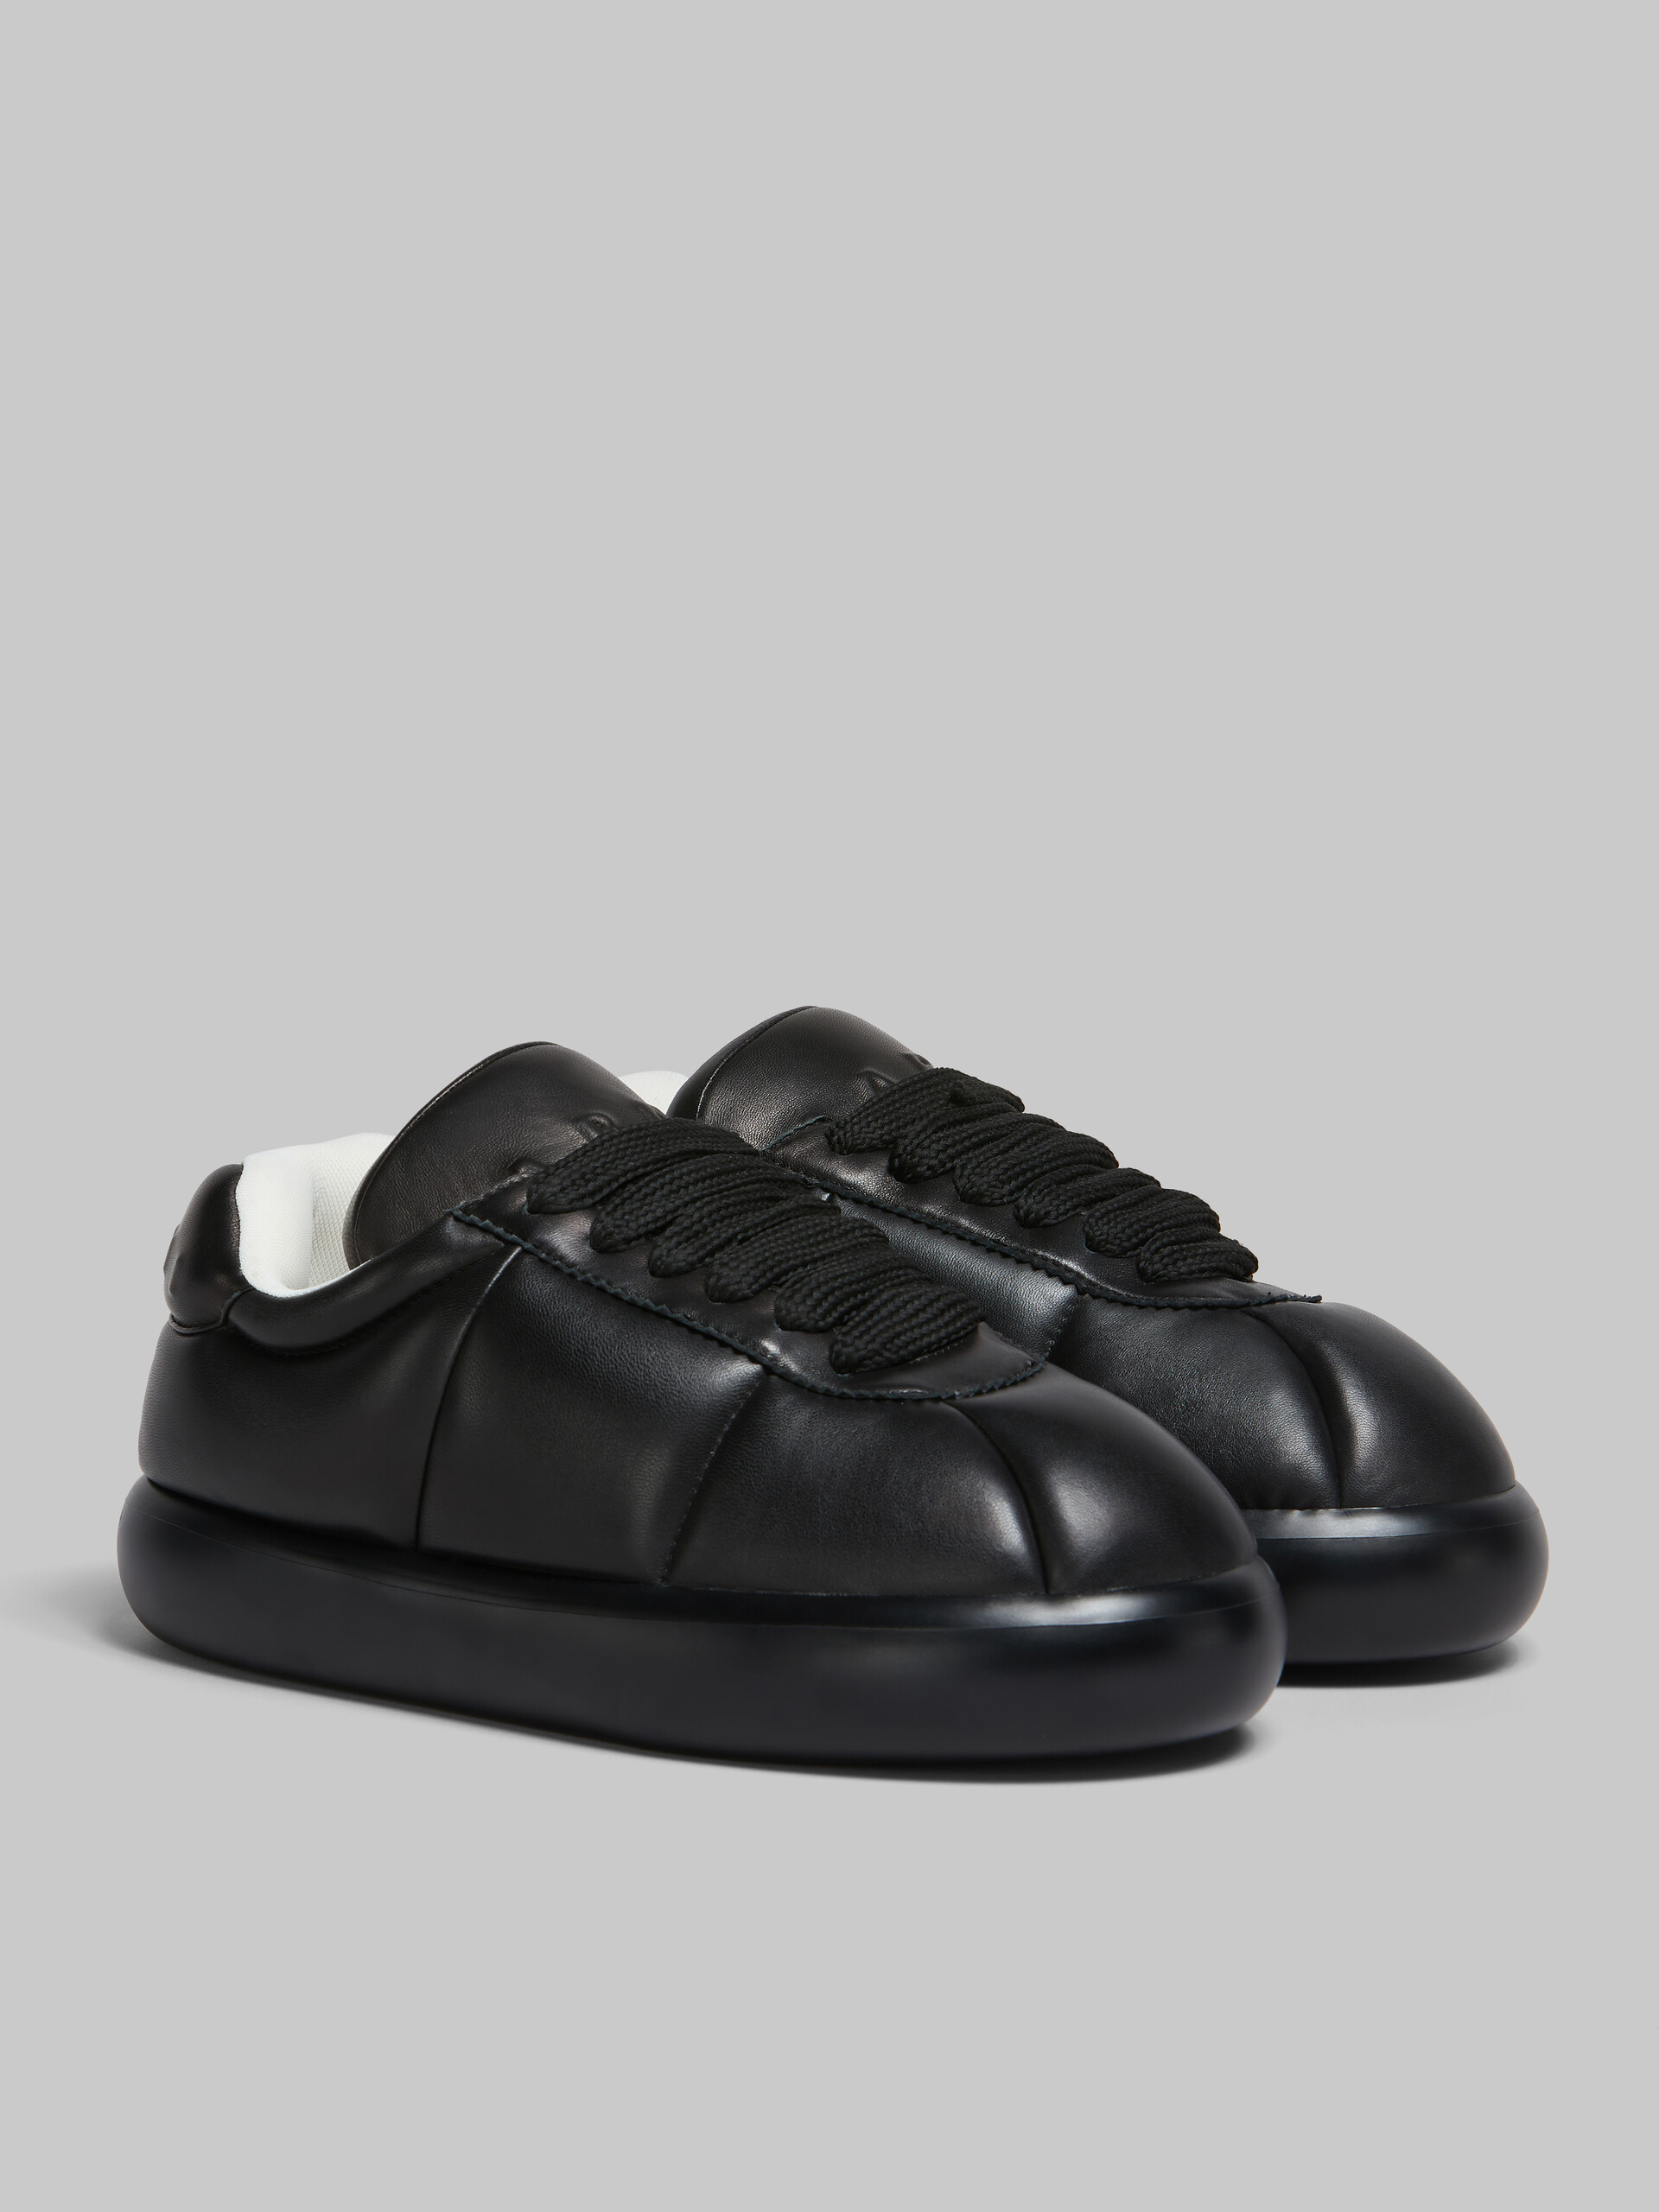 Black leather BigFoot 2.0 sneaker - Sneakers - Image 2